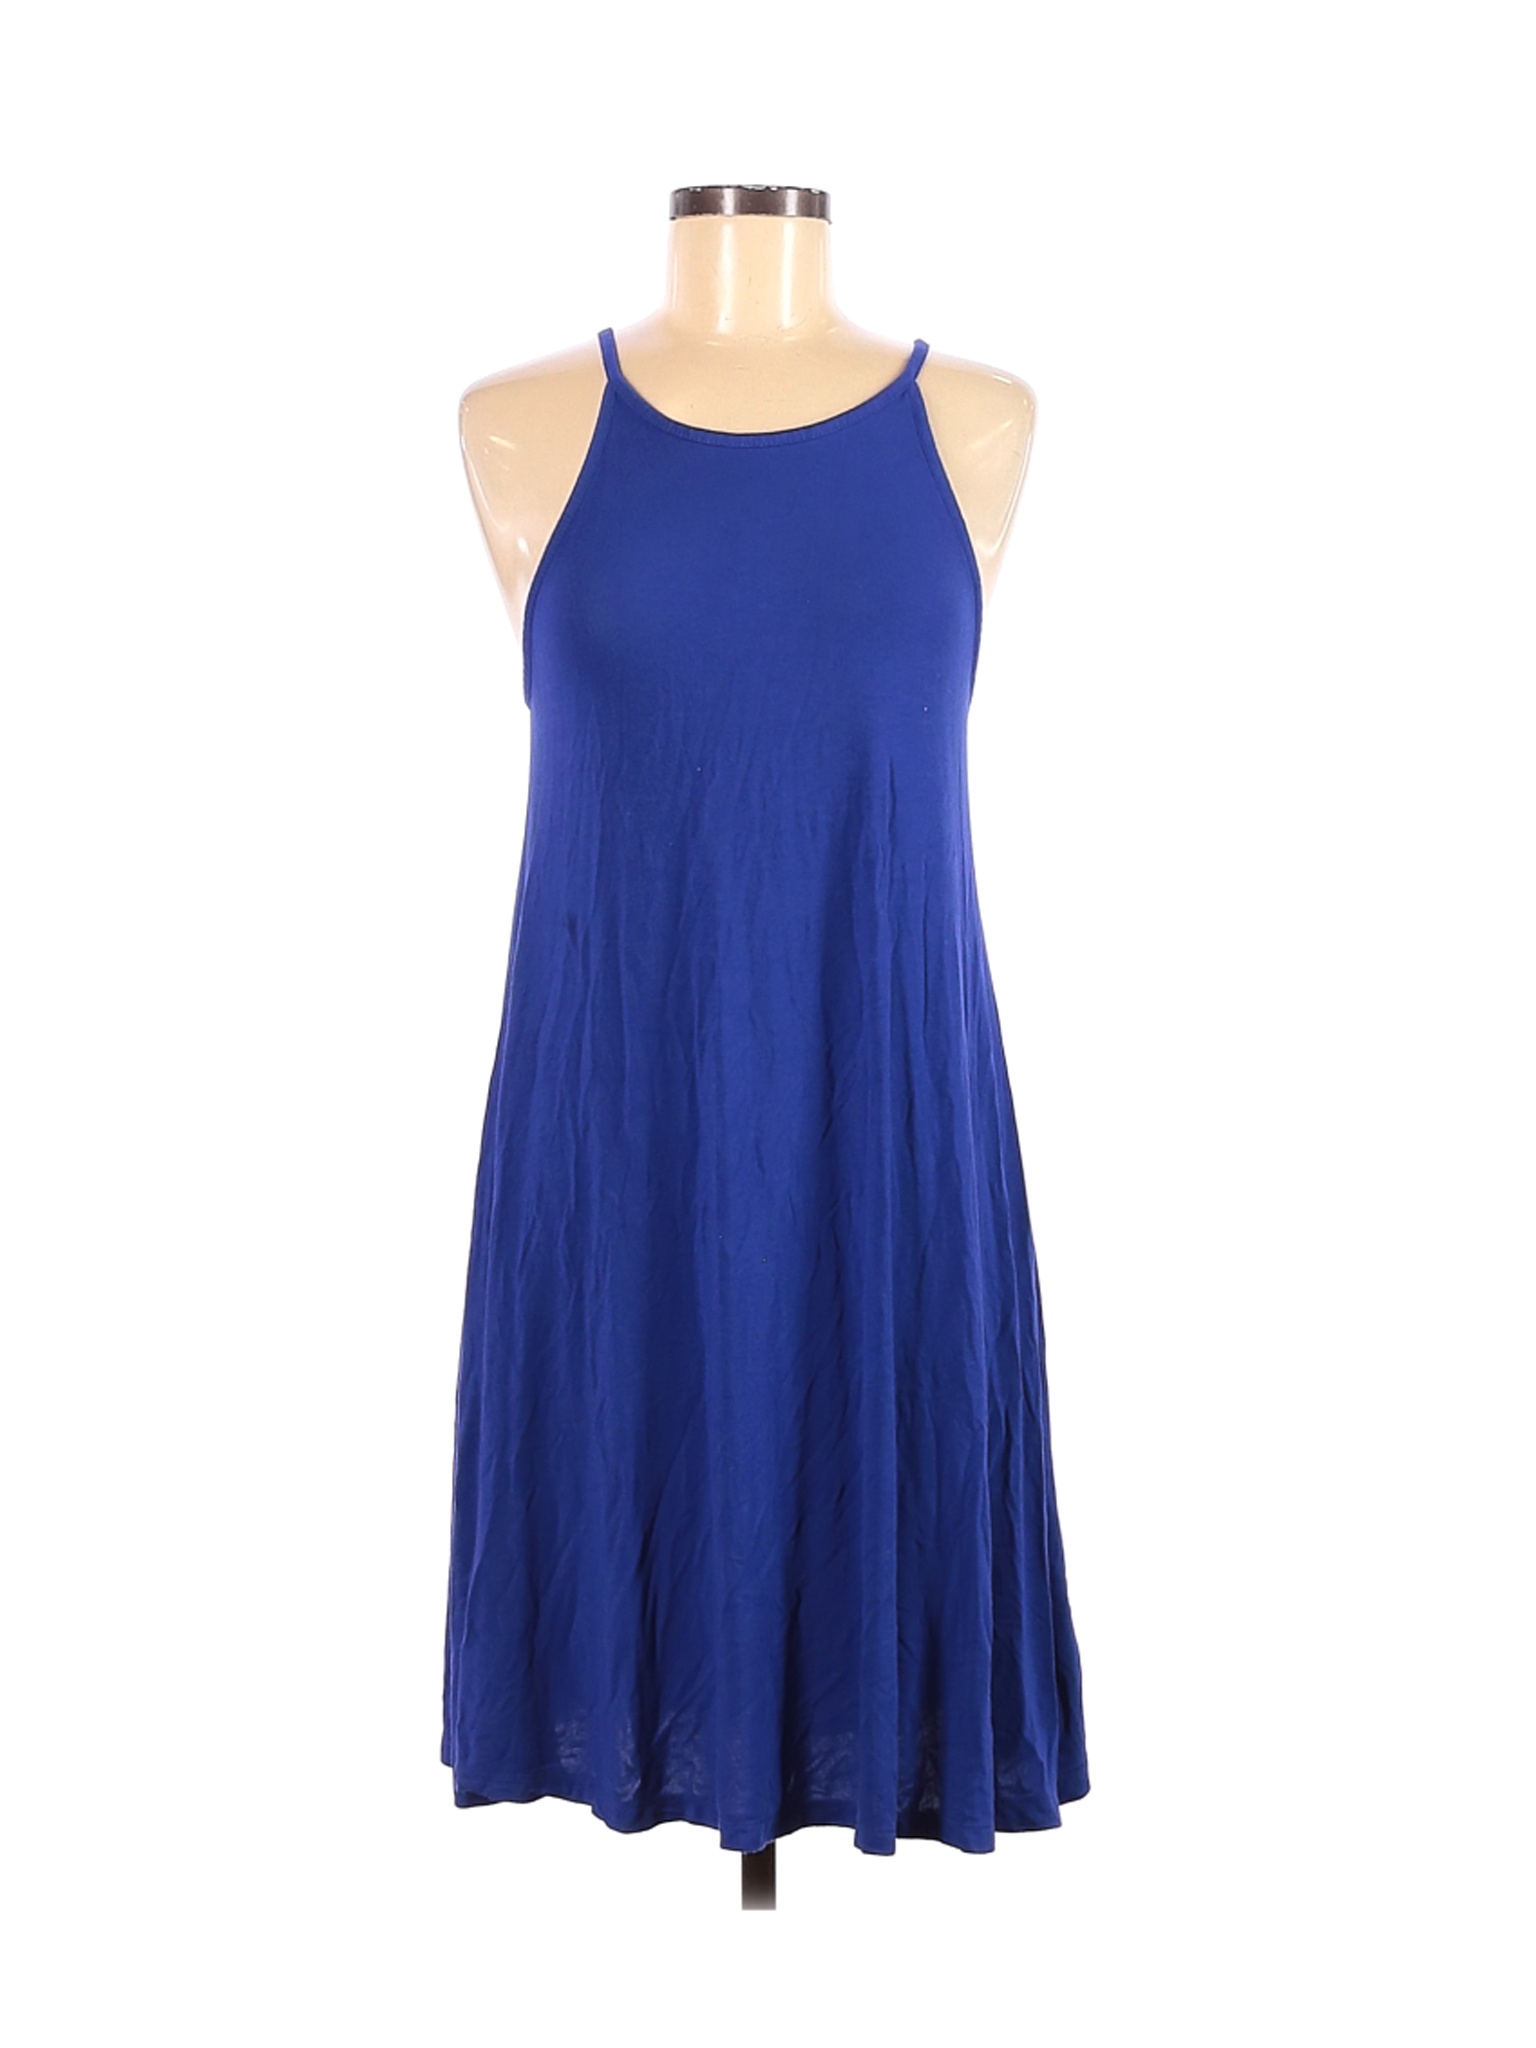 Old Navy Women Blue Casual Dress S Petites | eBay